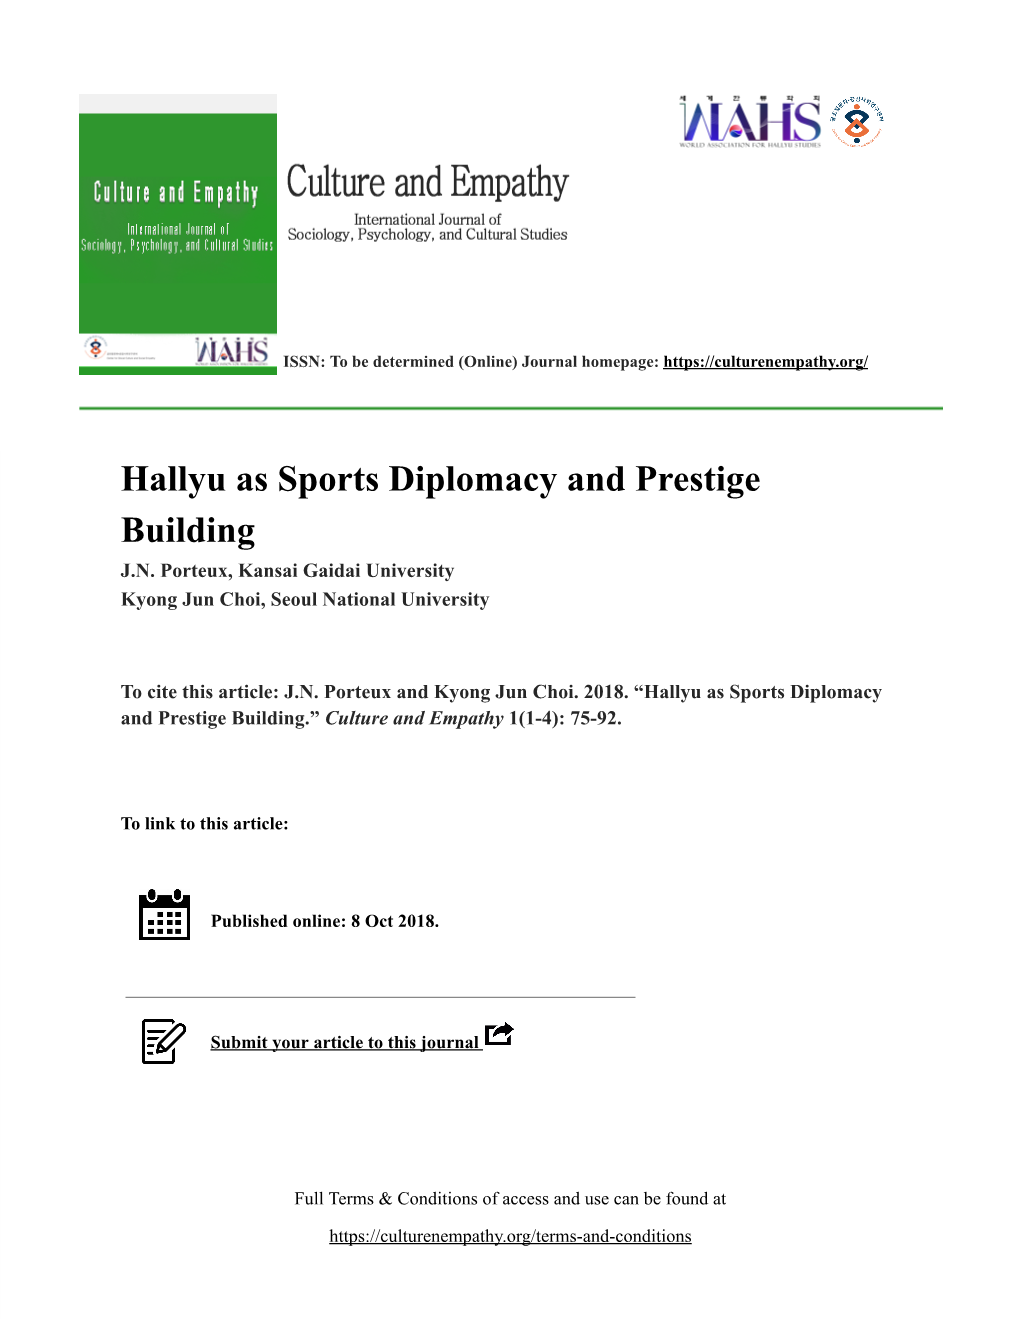 Hallyu As Sports Diplomacy and Prestige Building J.N